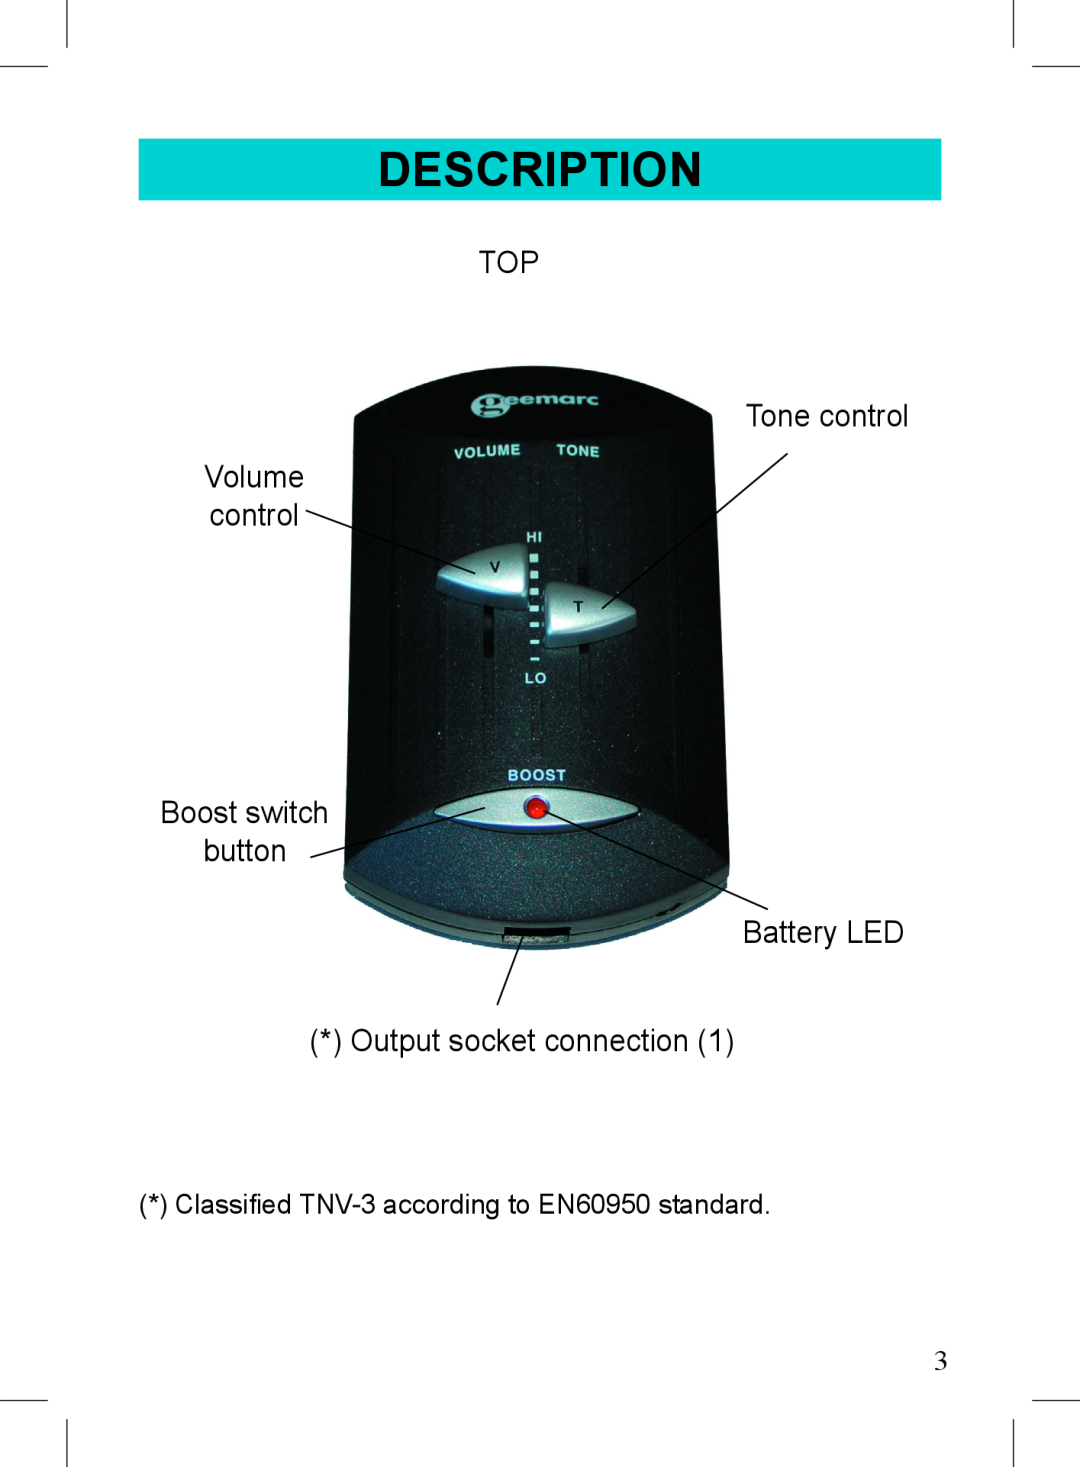 Geemarc P-AMP40 Description, TOP Tone control Volume control Boost switch, button Battery LED Output socket connection 